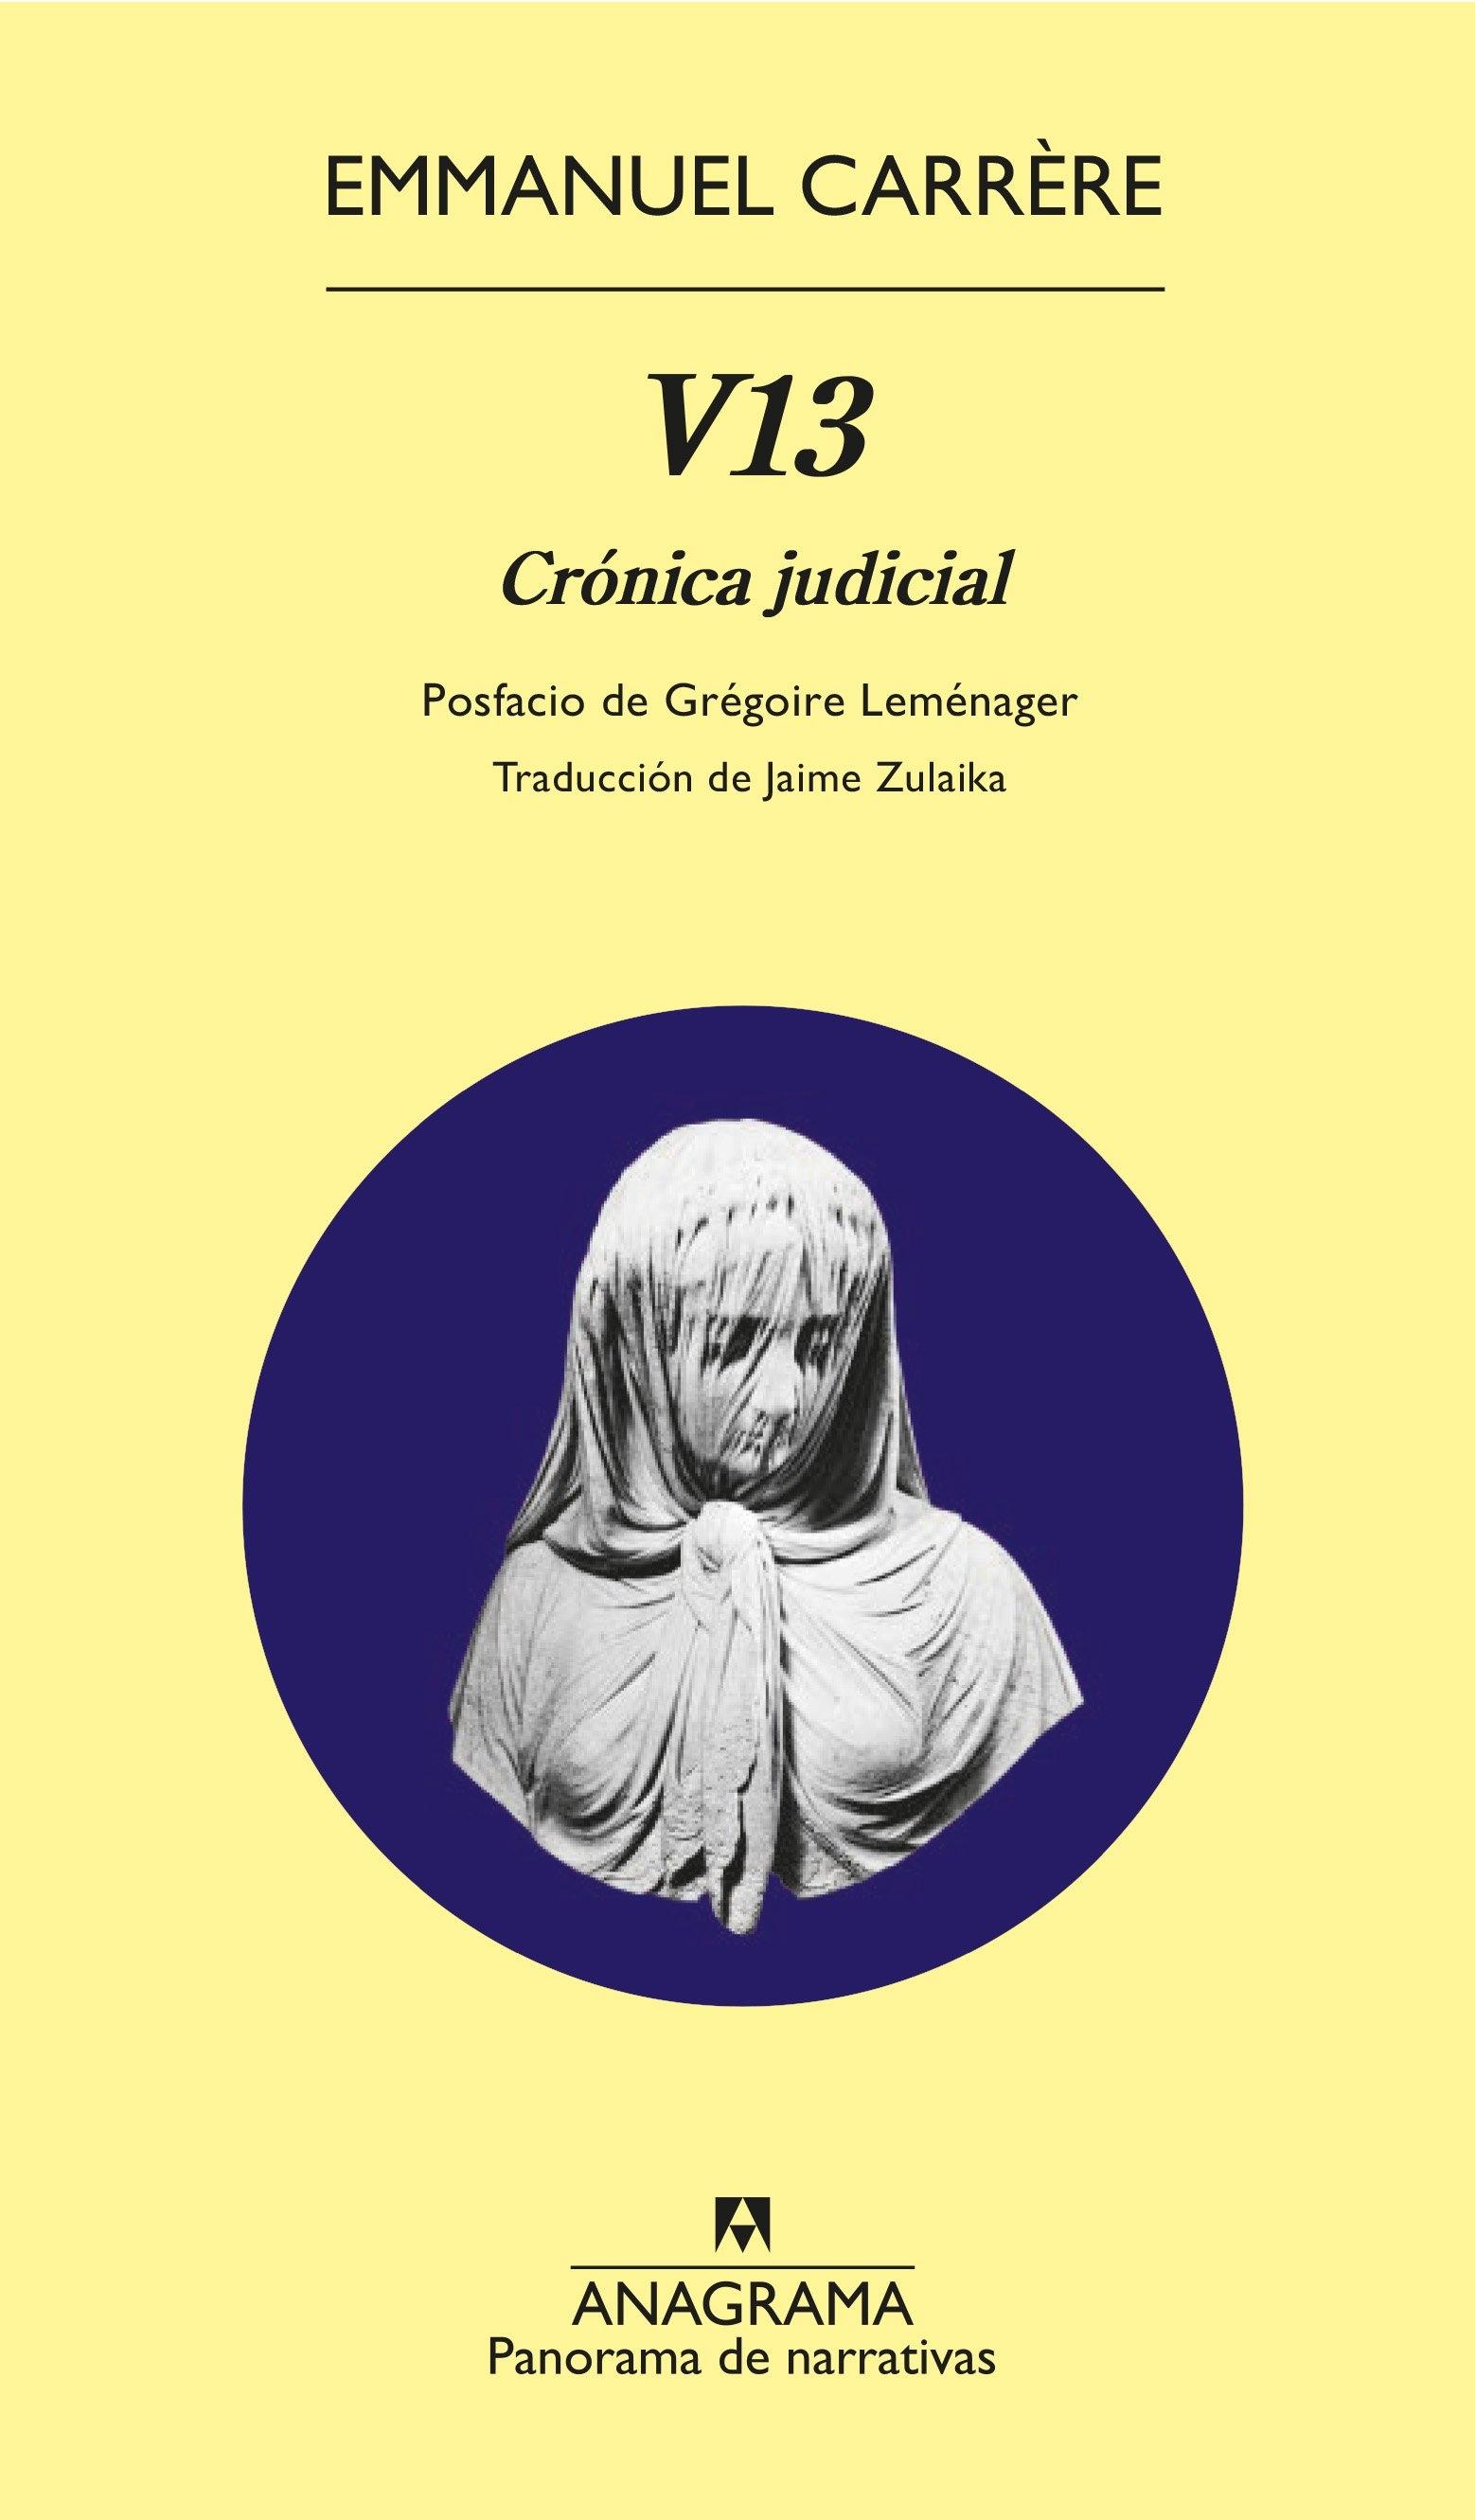 V13 "Crónica Judicial". 